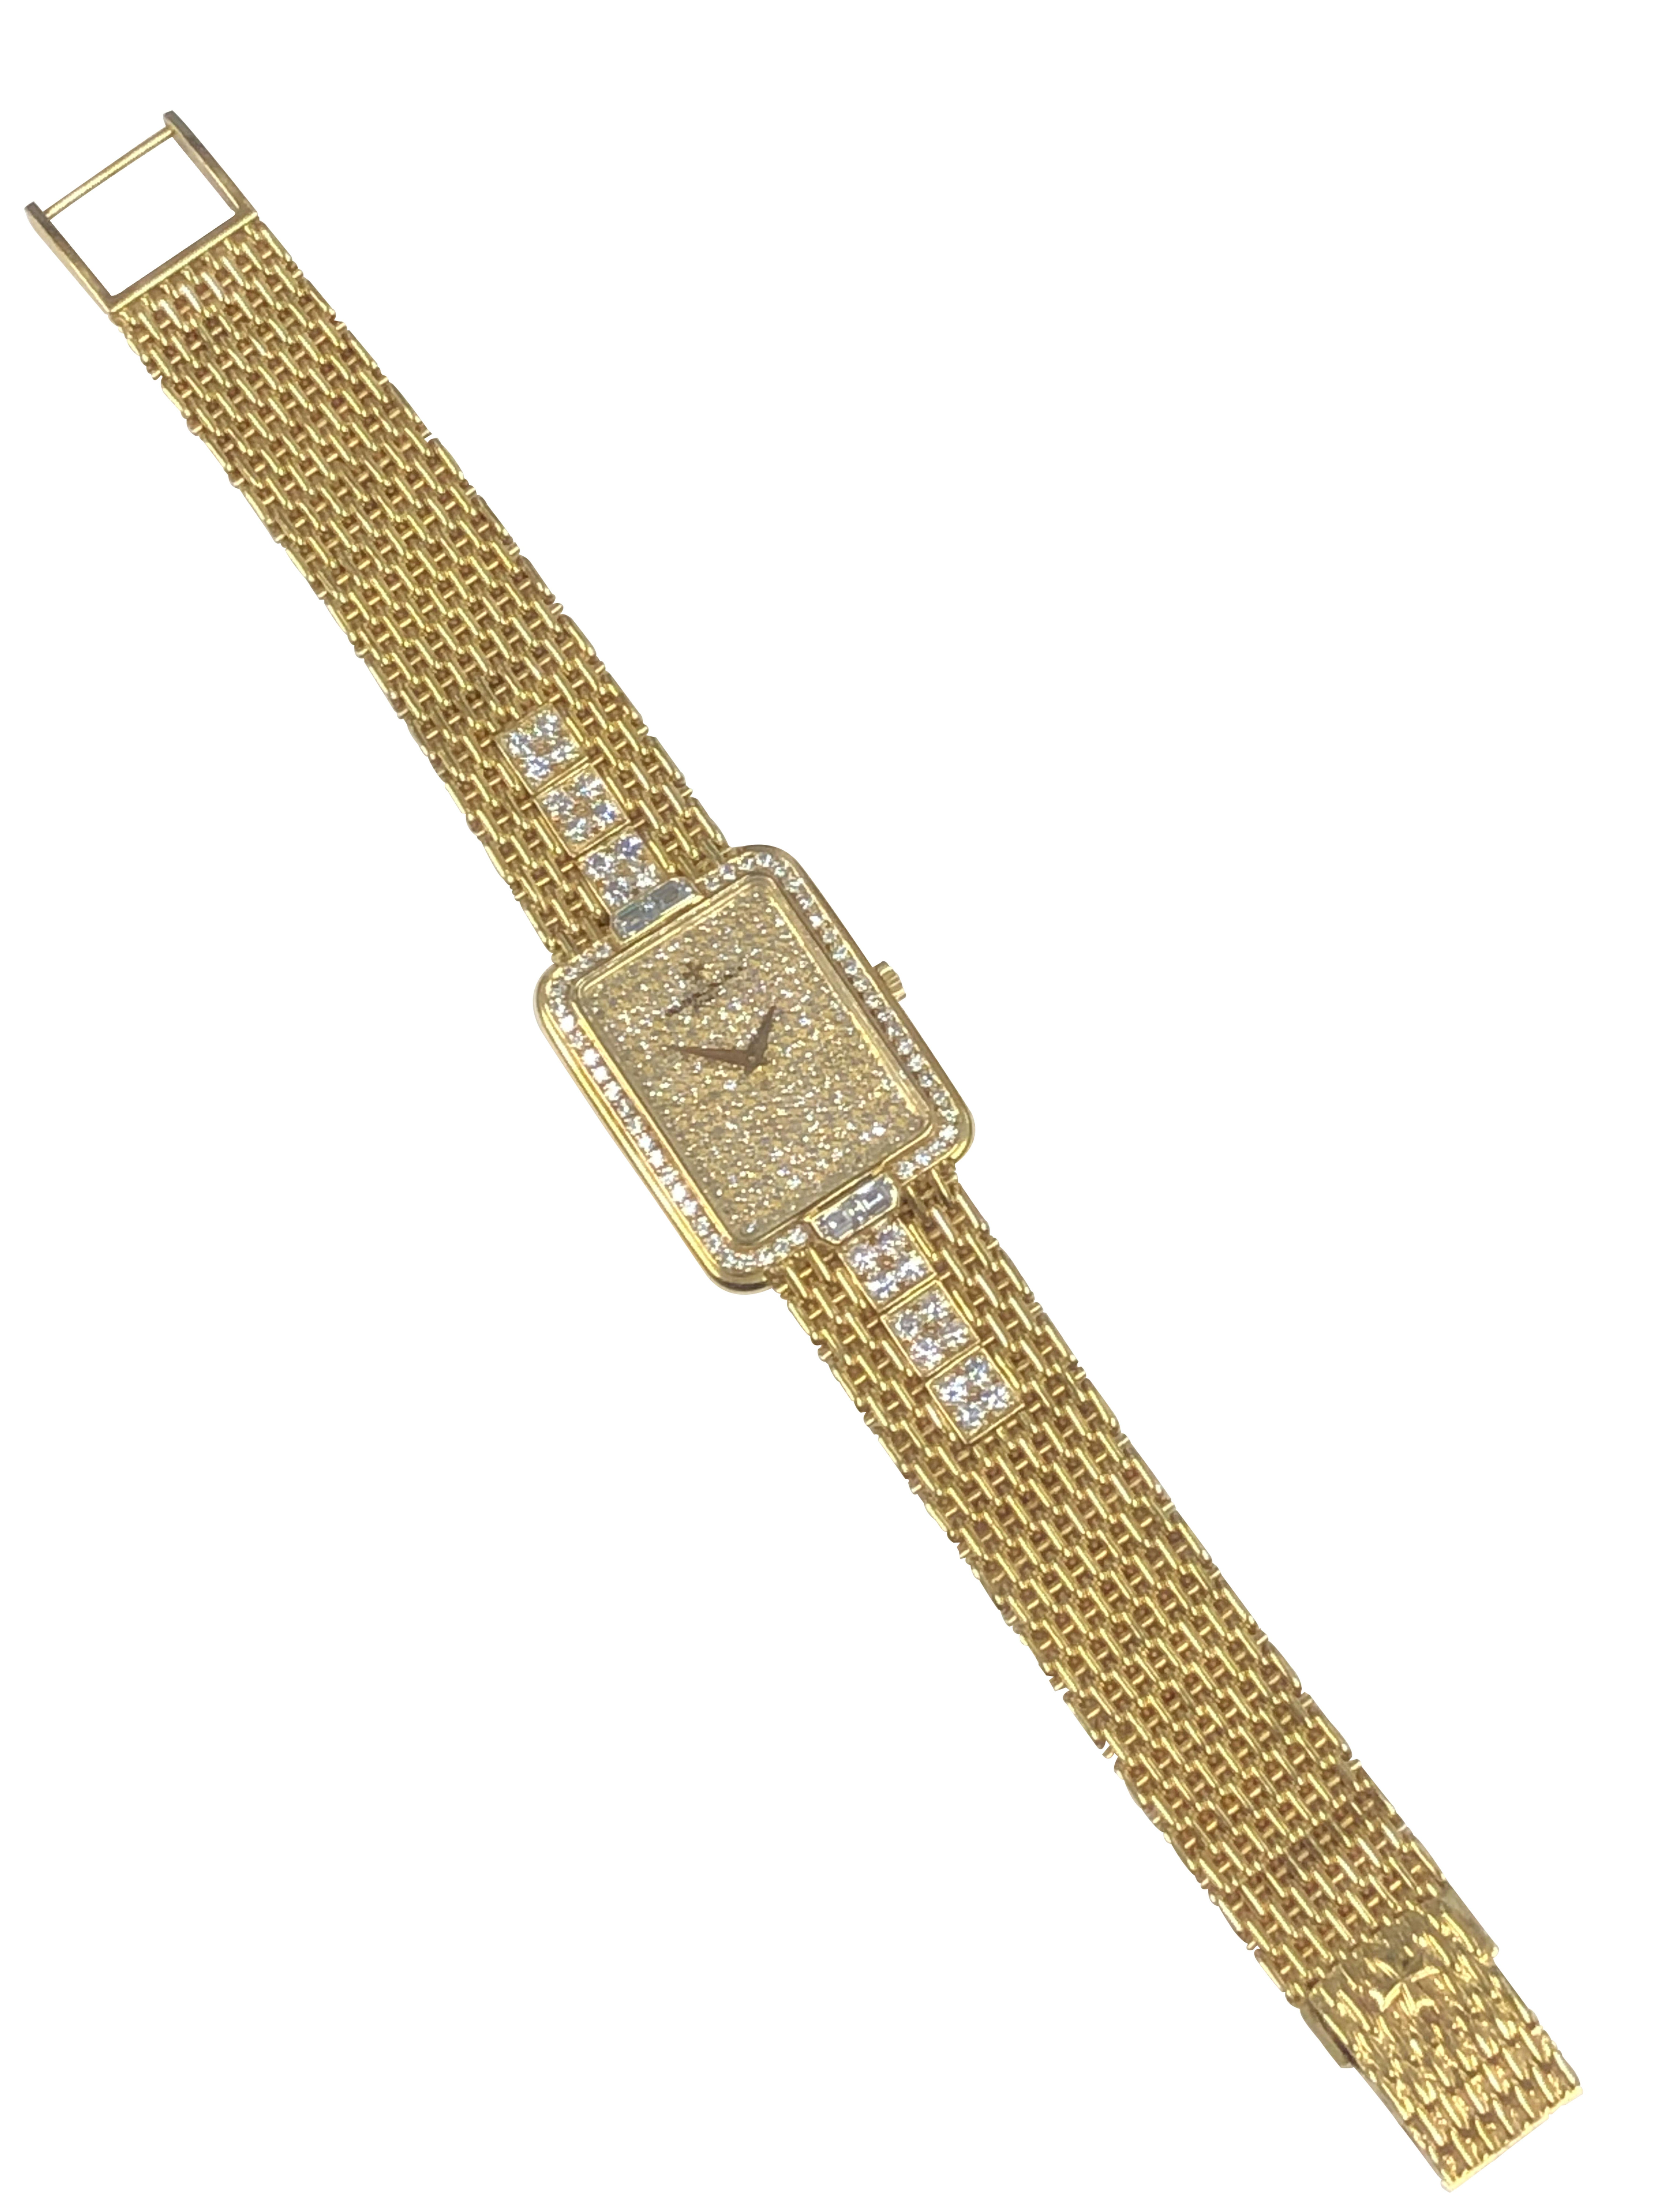 Vacheron Constantin Yellow Gold and Diamonds Bracelet Wristwatch 2